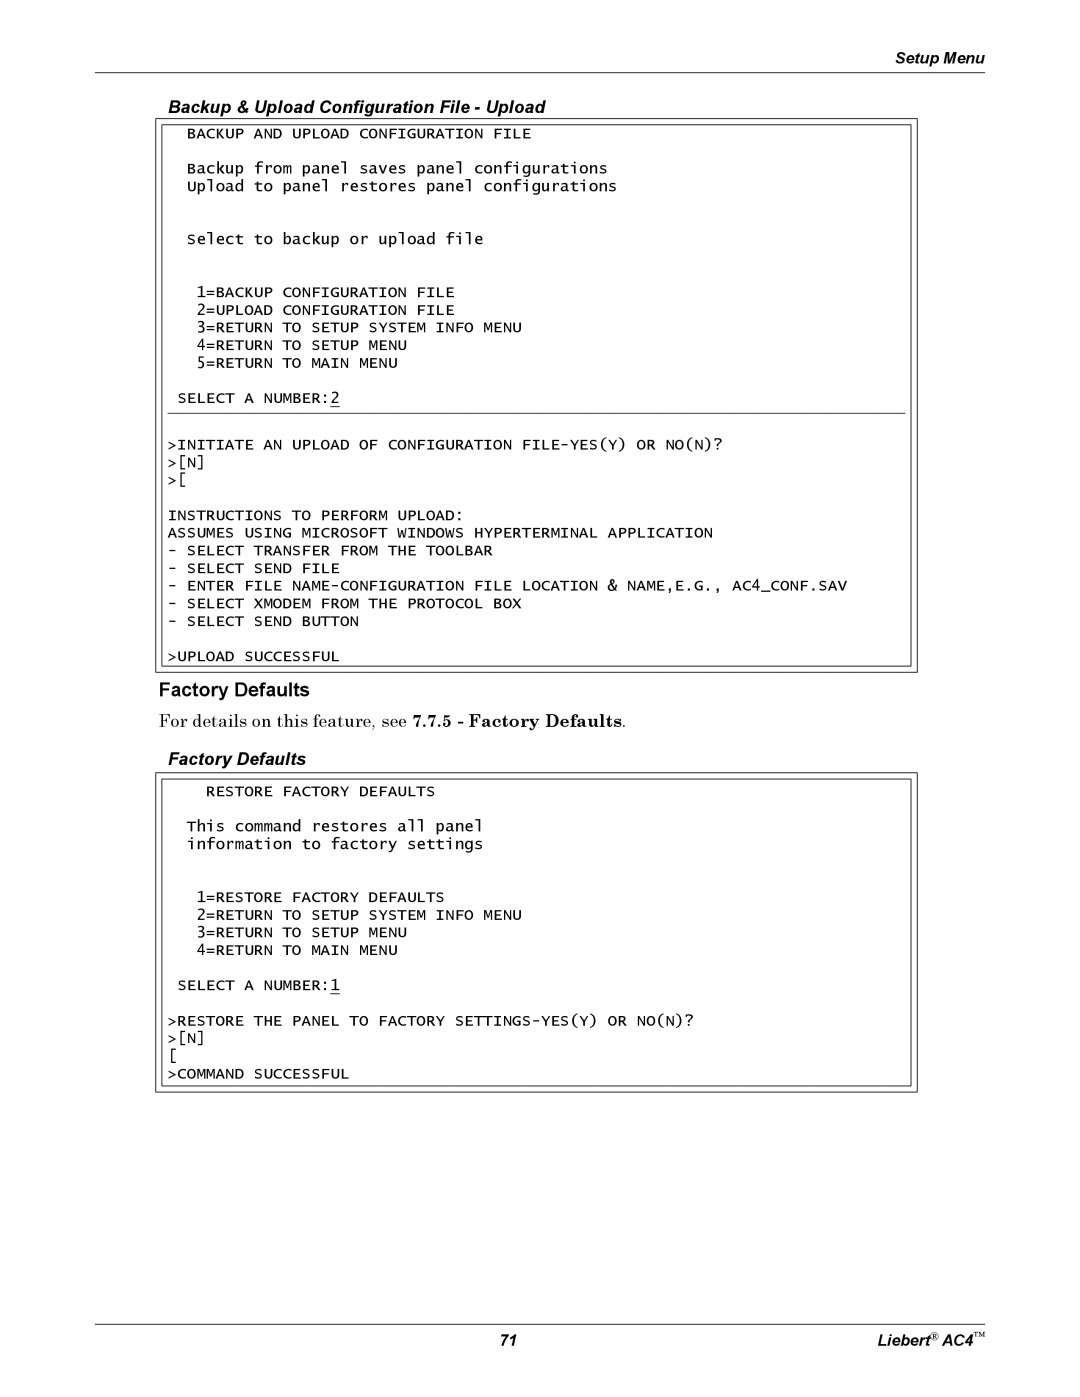 Emerson user manual Factory Defaults, Backup & Upload Configuration File - Upload, Setup Menu, Liebert AC4 